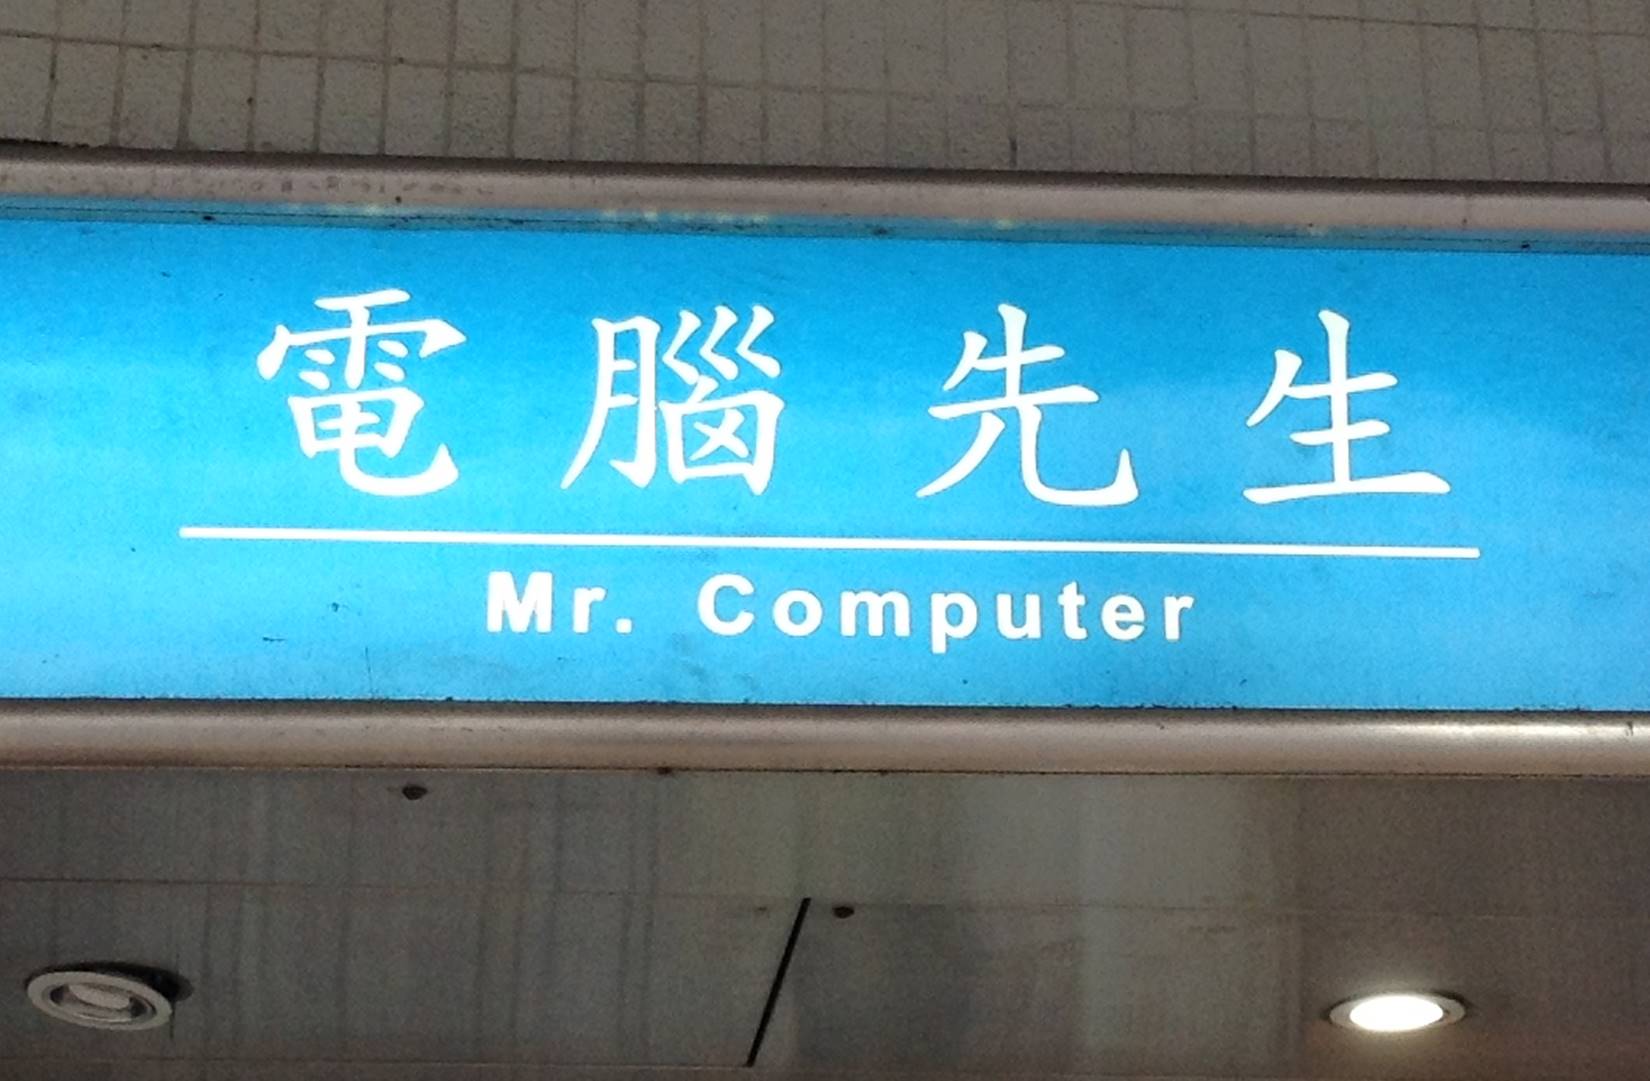 Mr. Computer